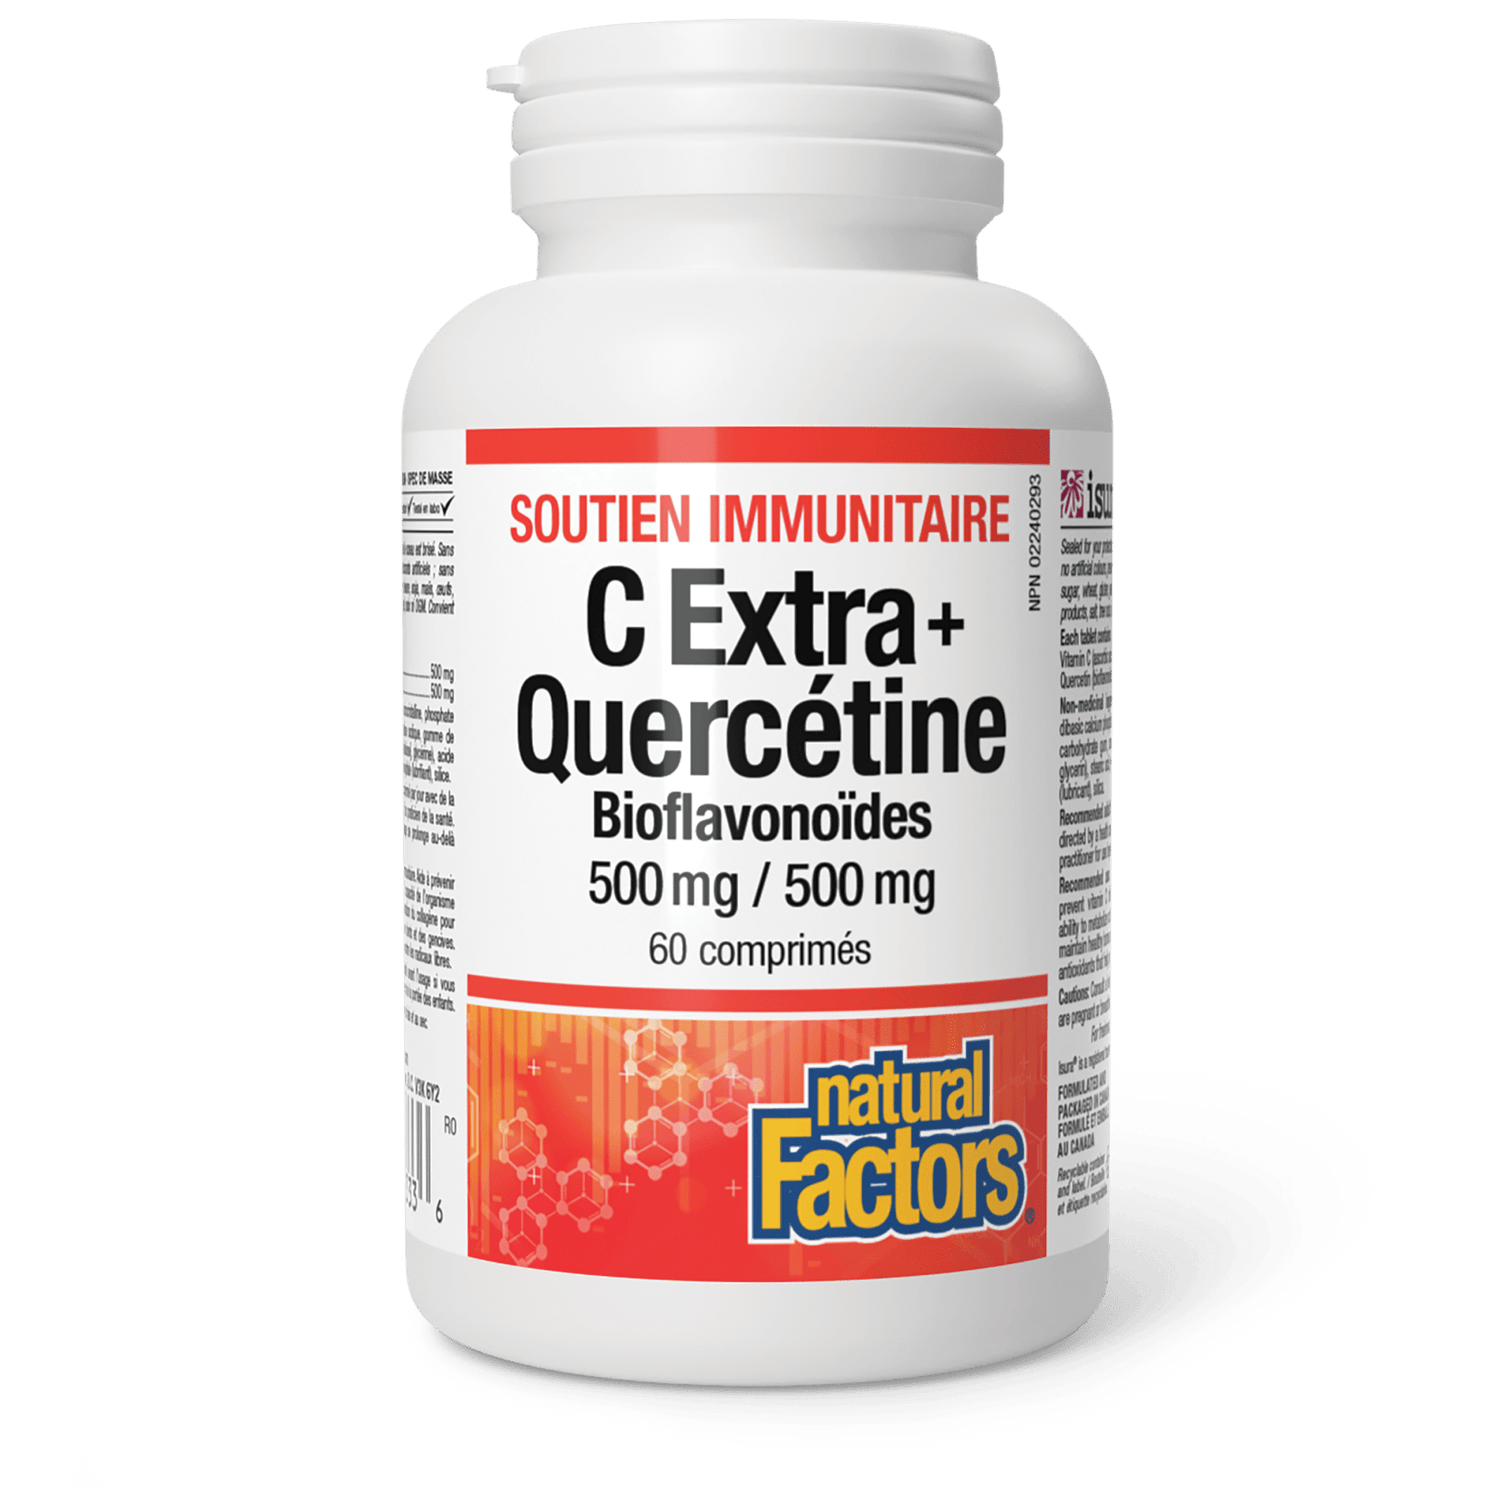 C Extra+ Quercétine Bioflavonoïdes 500 mg/500 mg, Natural Factors|v|image|1333